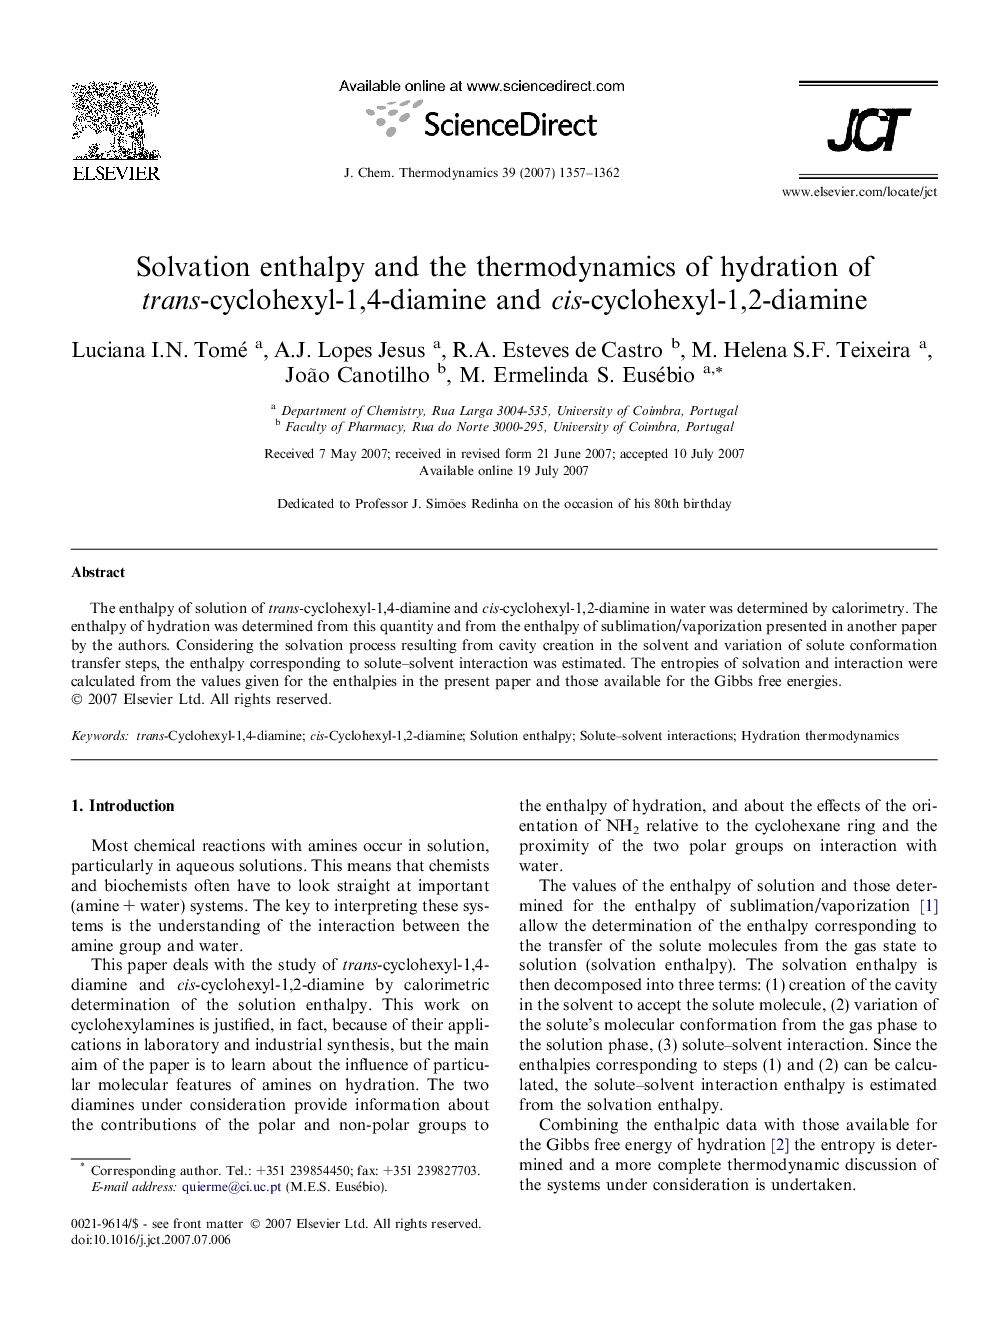 Solvation enthalpy and the thermodynamics of hydration of trans-cyclohexyl-1,4-diamine and cis-cyclohexyl-1,2-diamine